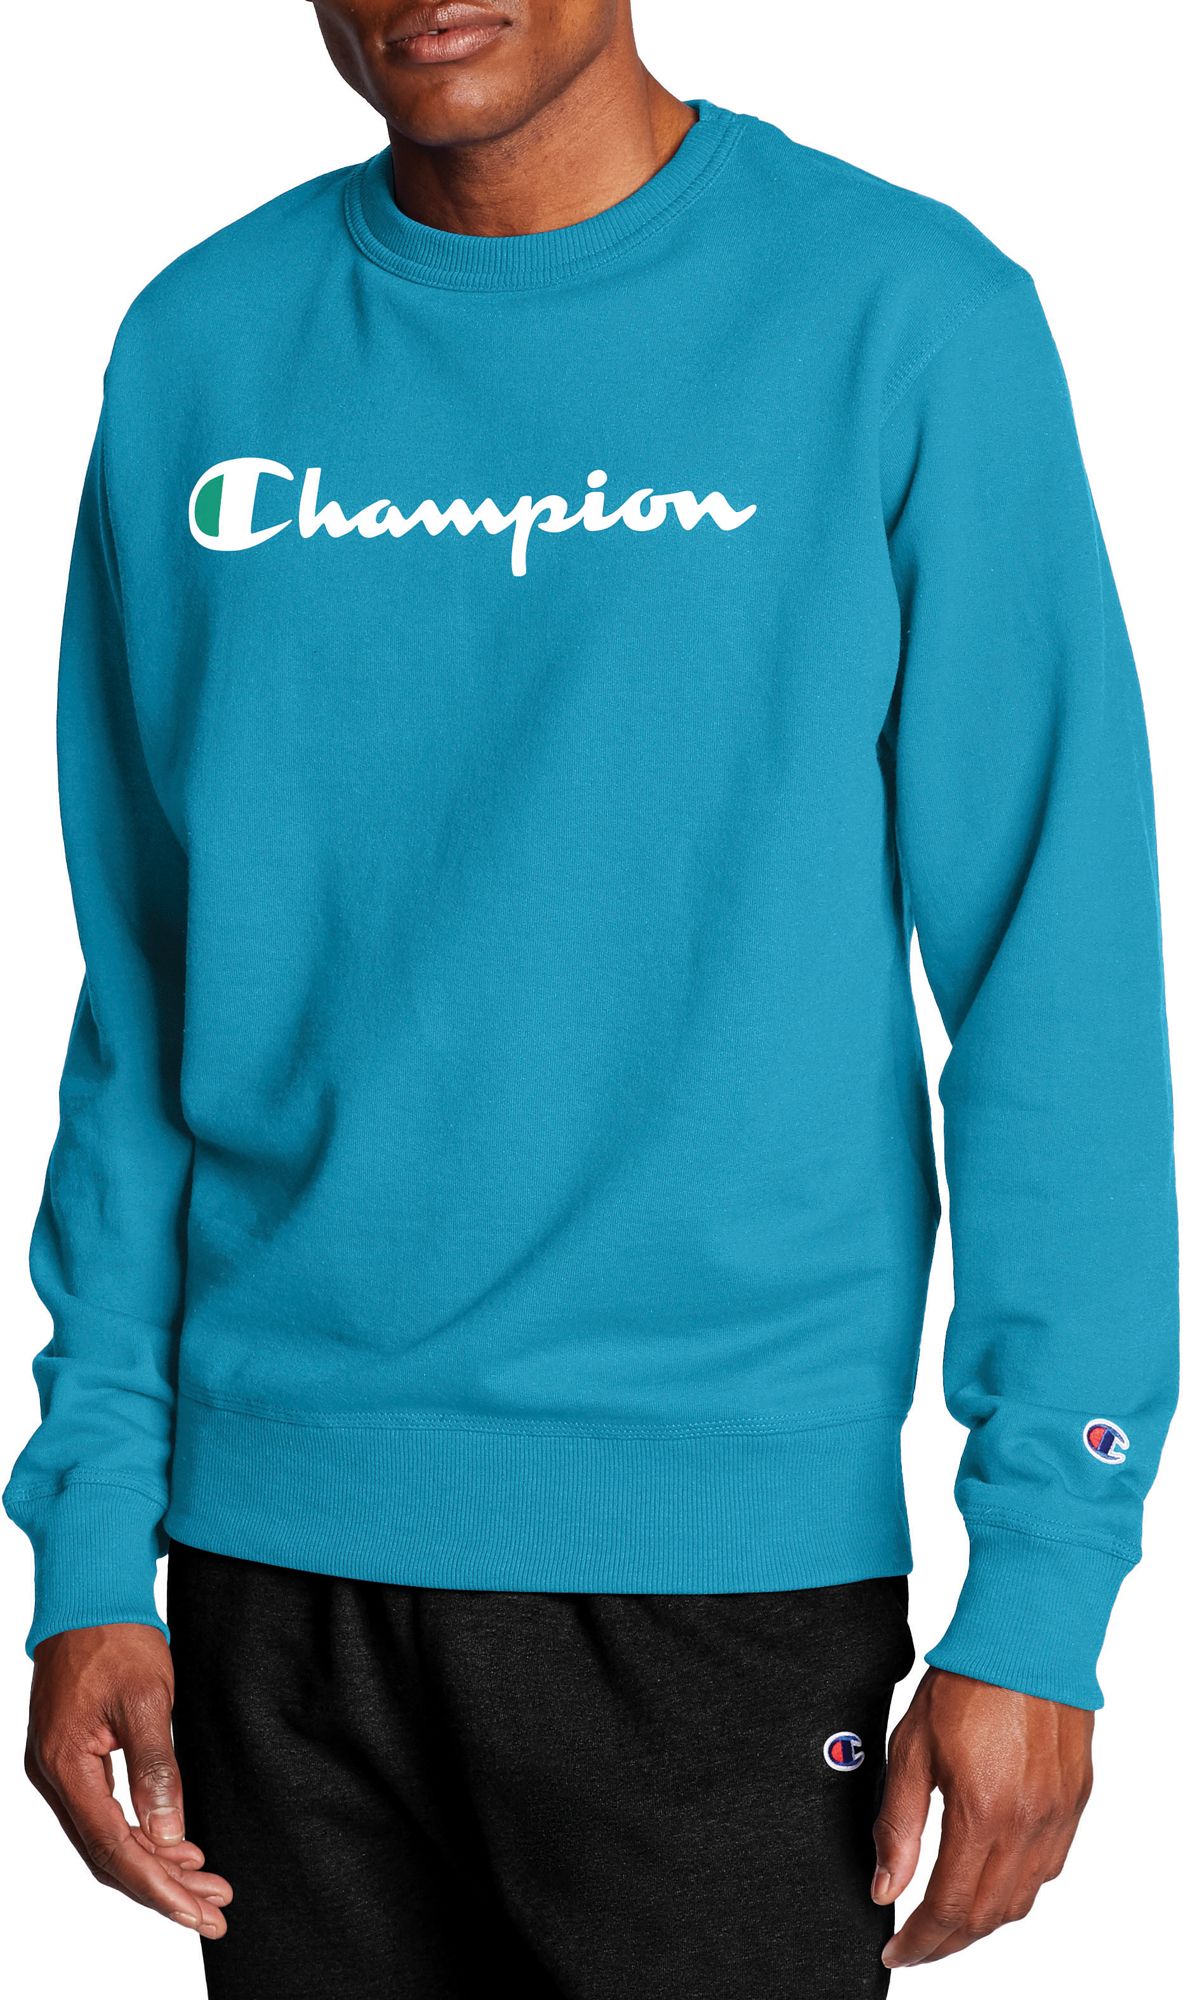 champion teal sweater